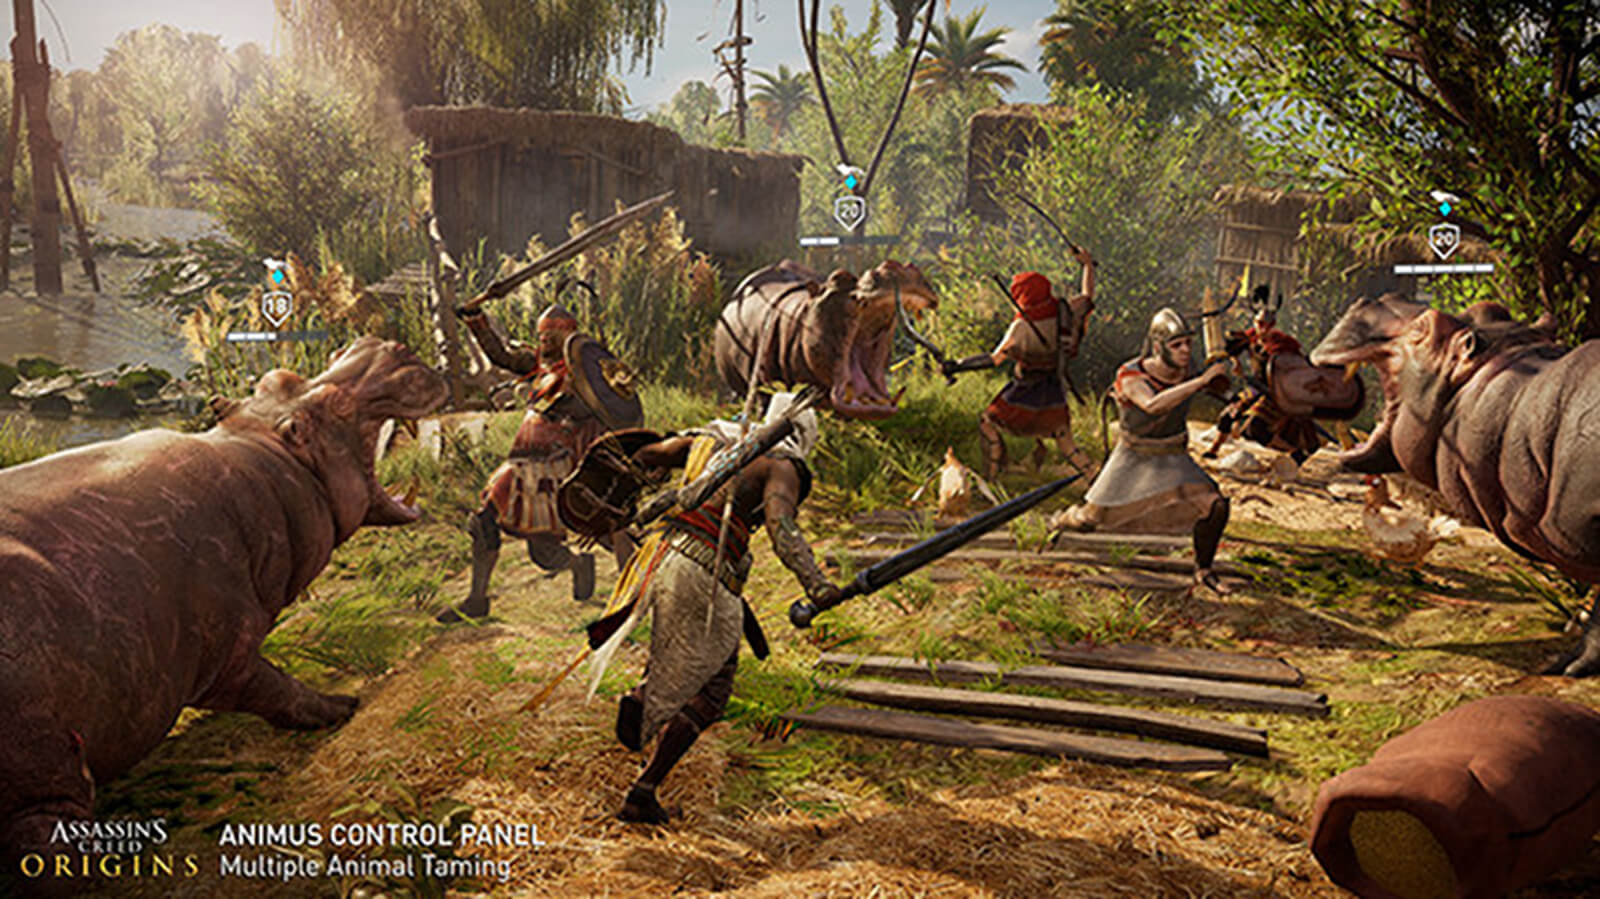 Animus Control Panel no Assassin's Creed Origins